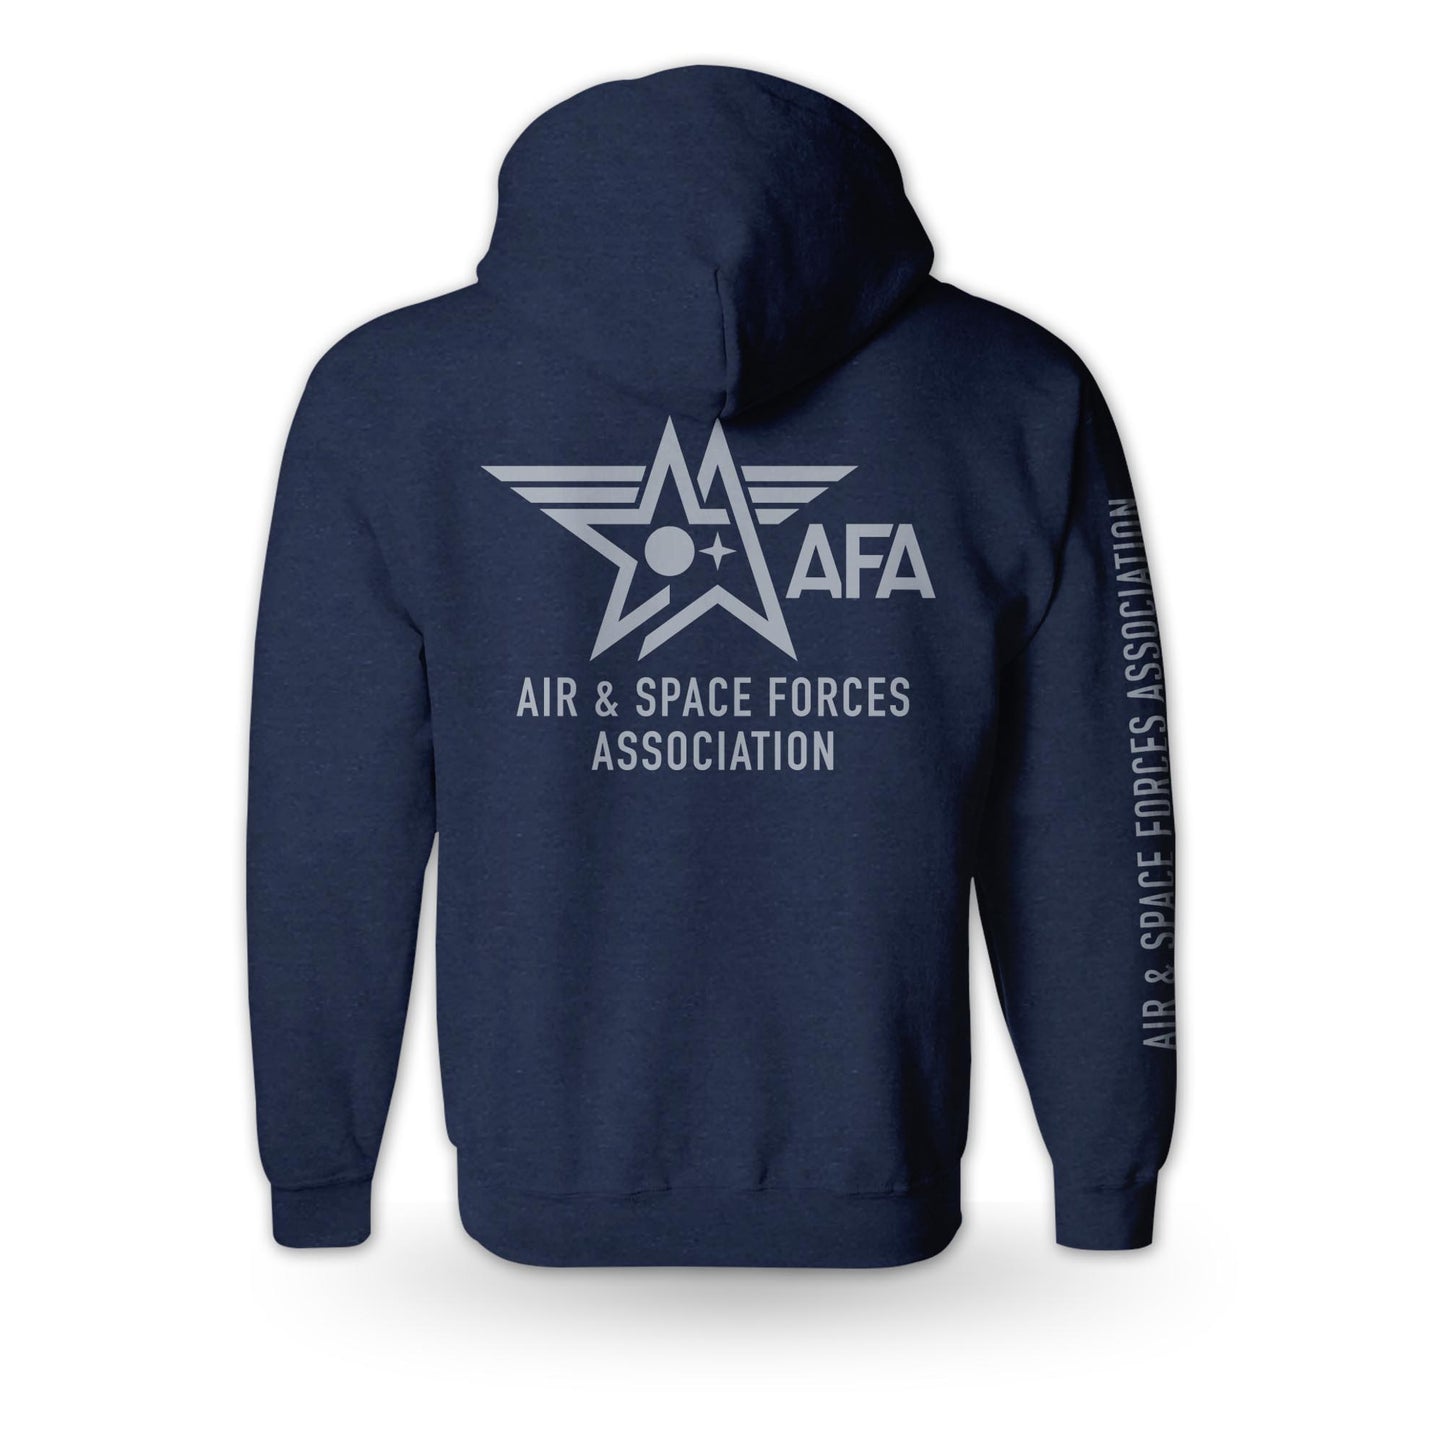 AFA- Air & Space Forces Association Hoodie